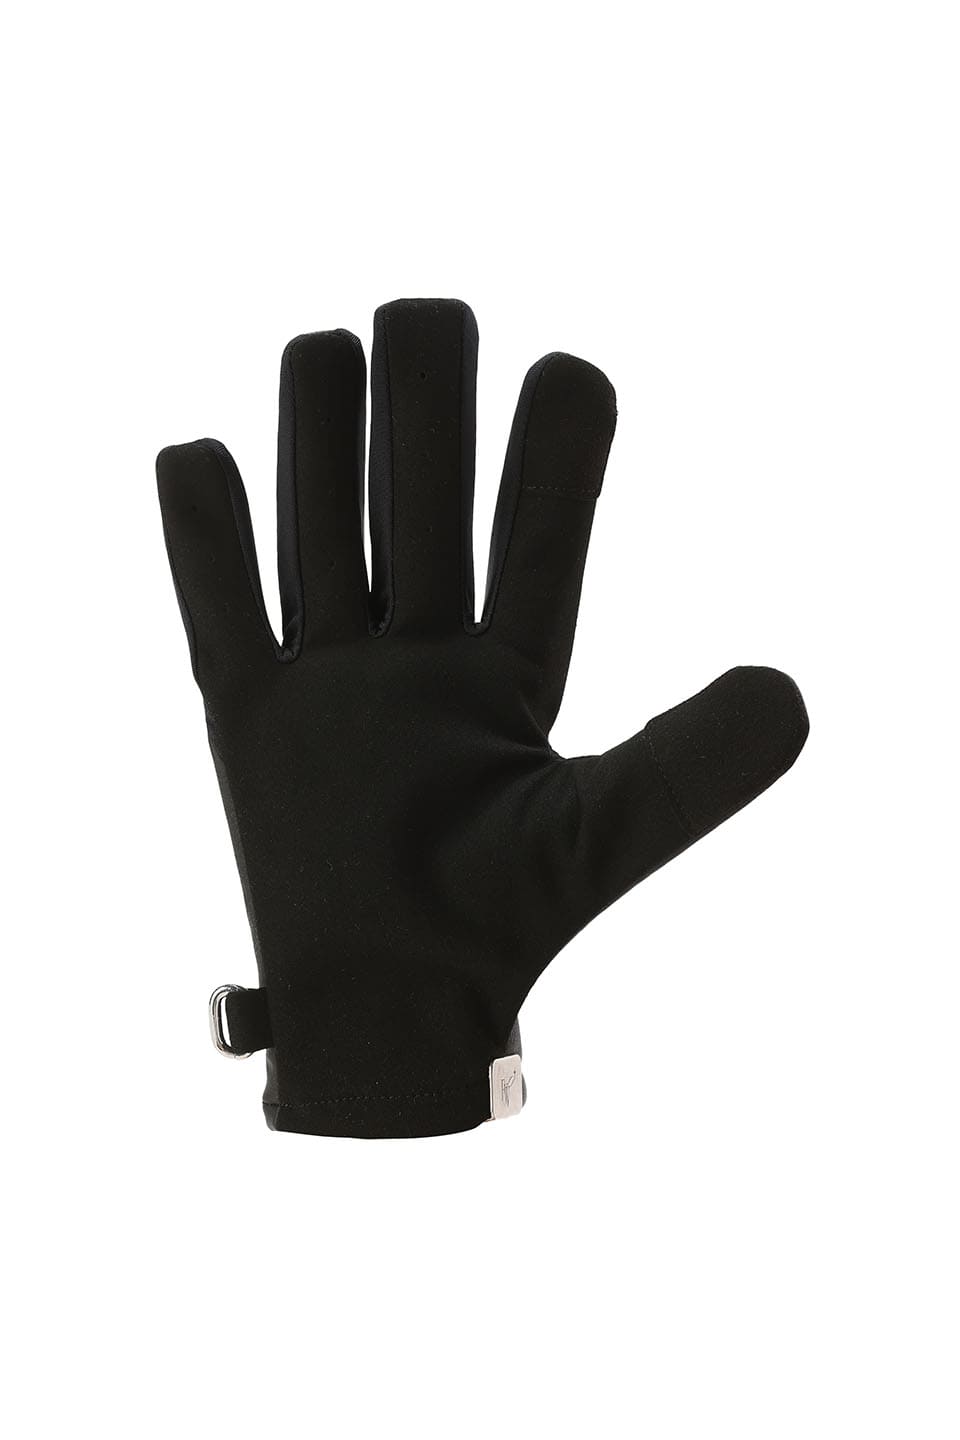 Fvvo Zippered Leather Gloves